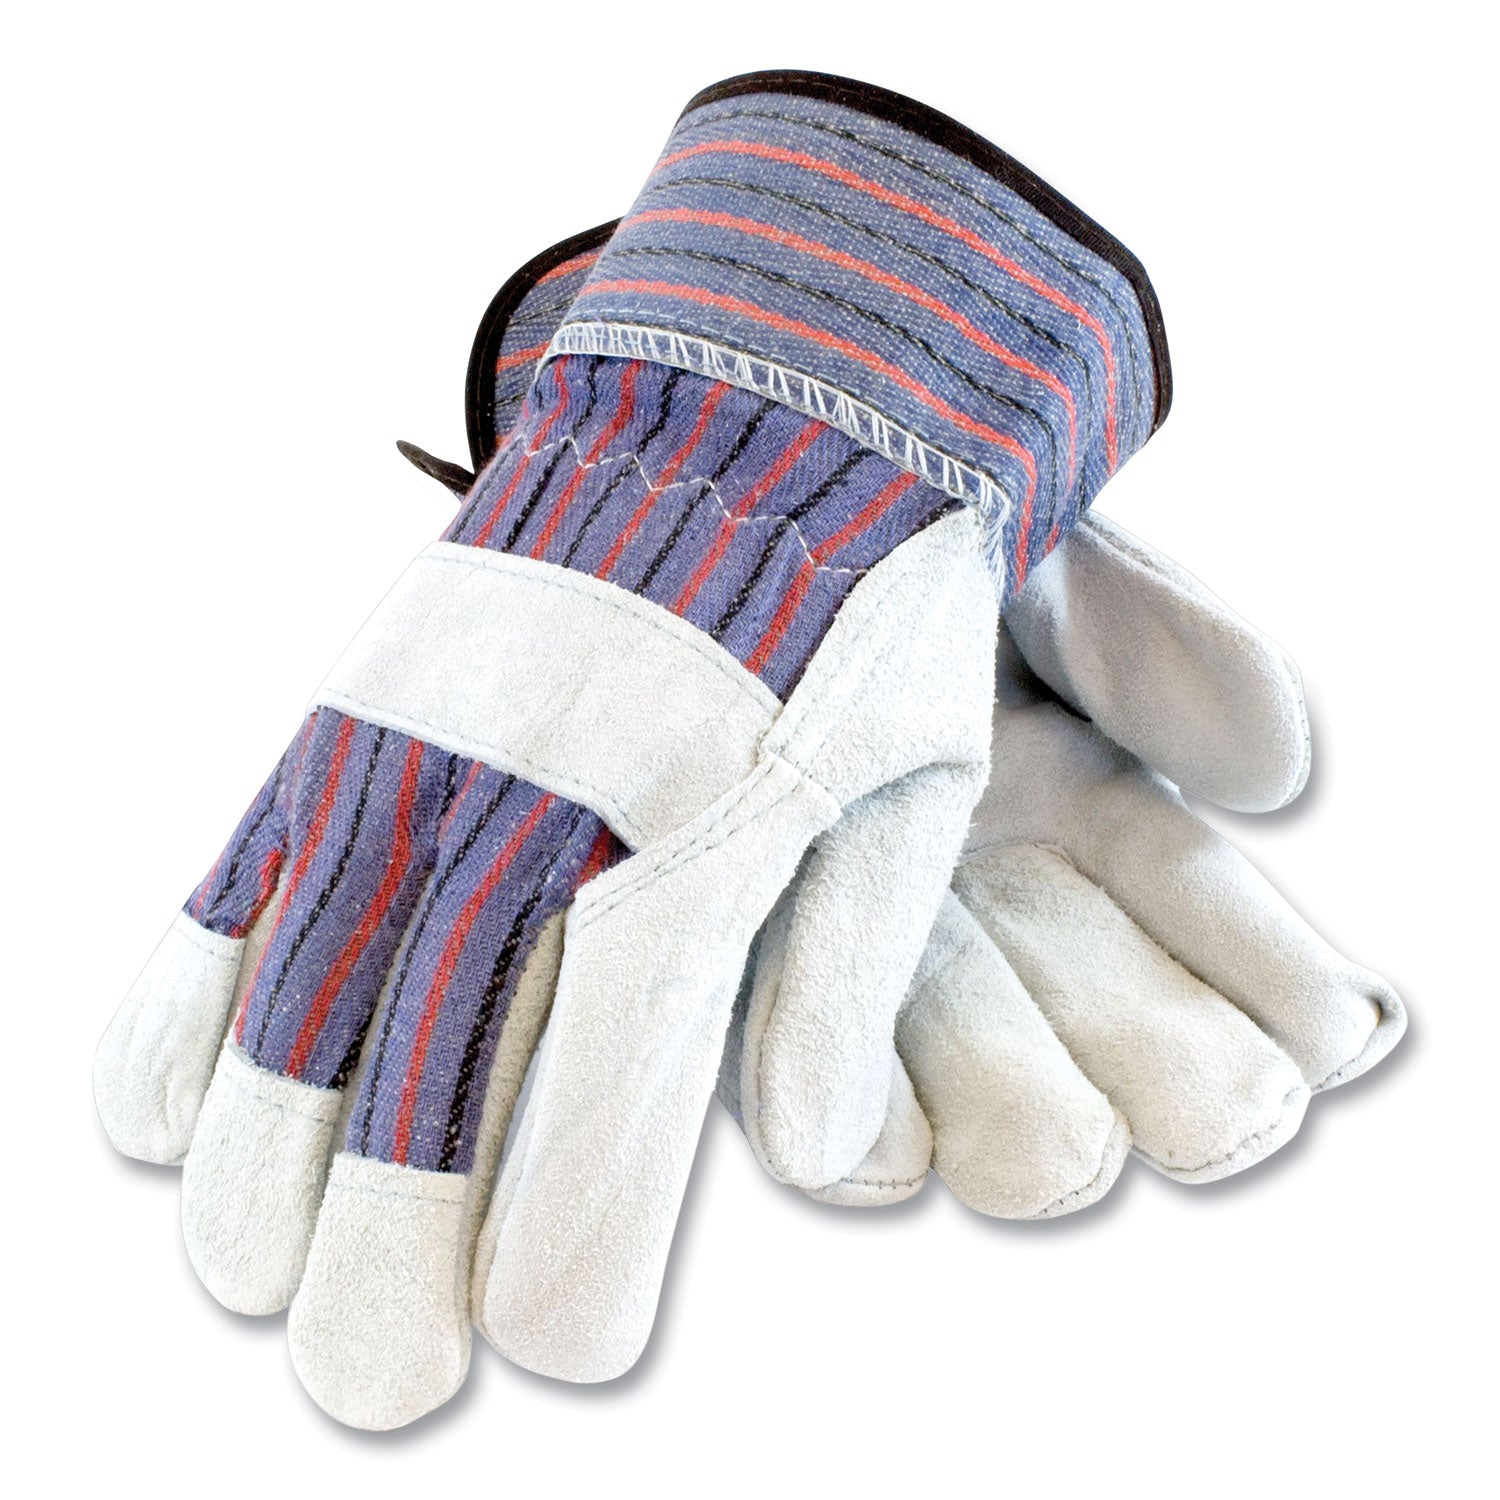 shoulder-split-cowhide-leather-palm-gloves-b-c-grade-x-large-blue-gray-12-pairs_pid847532xl - 1